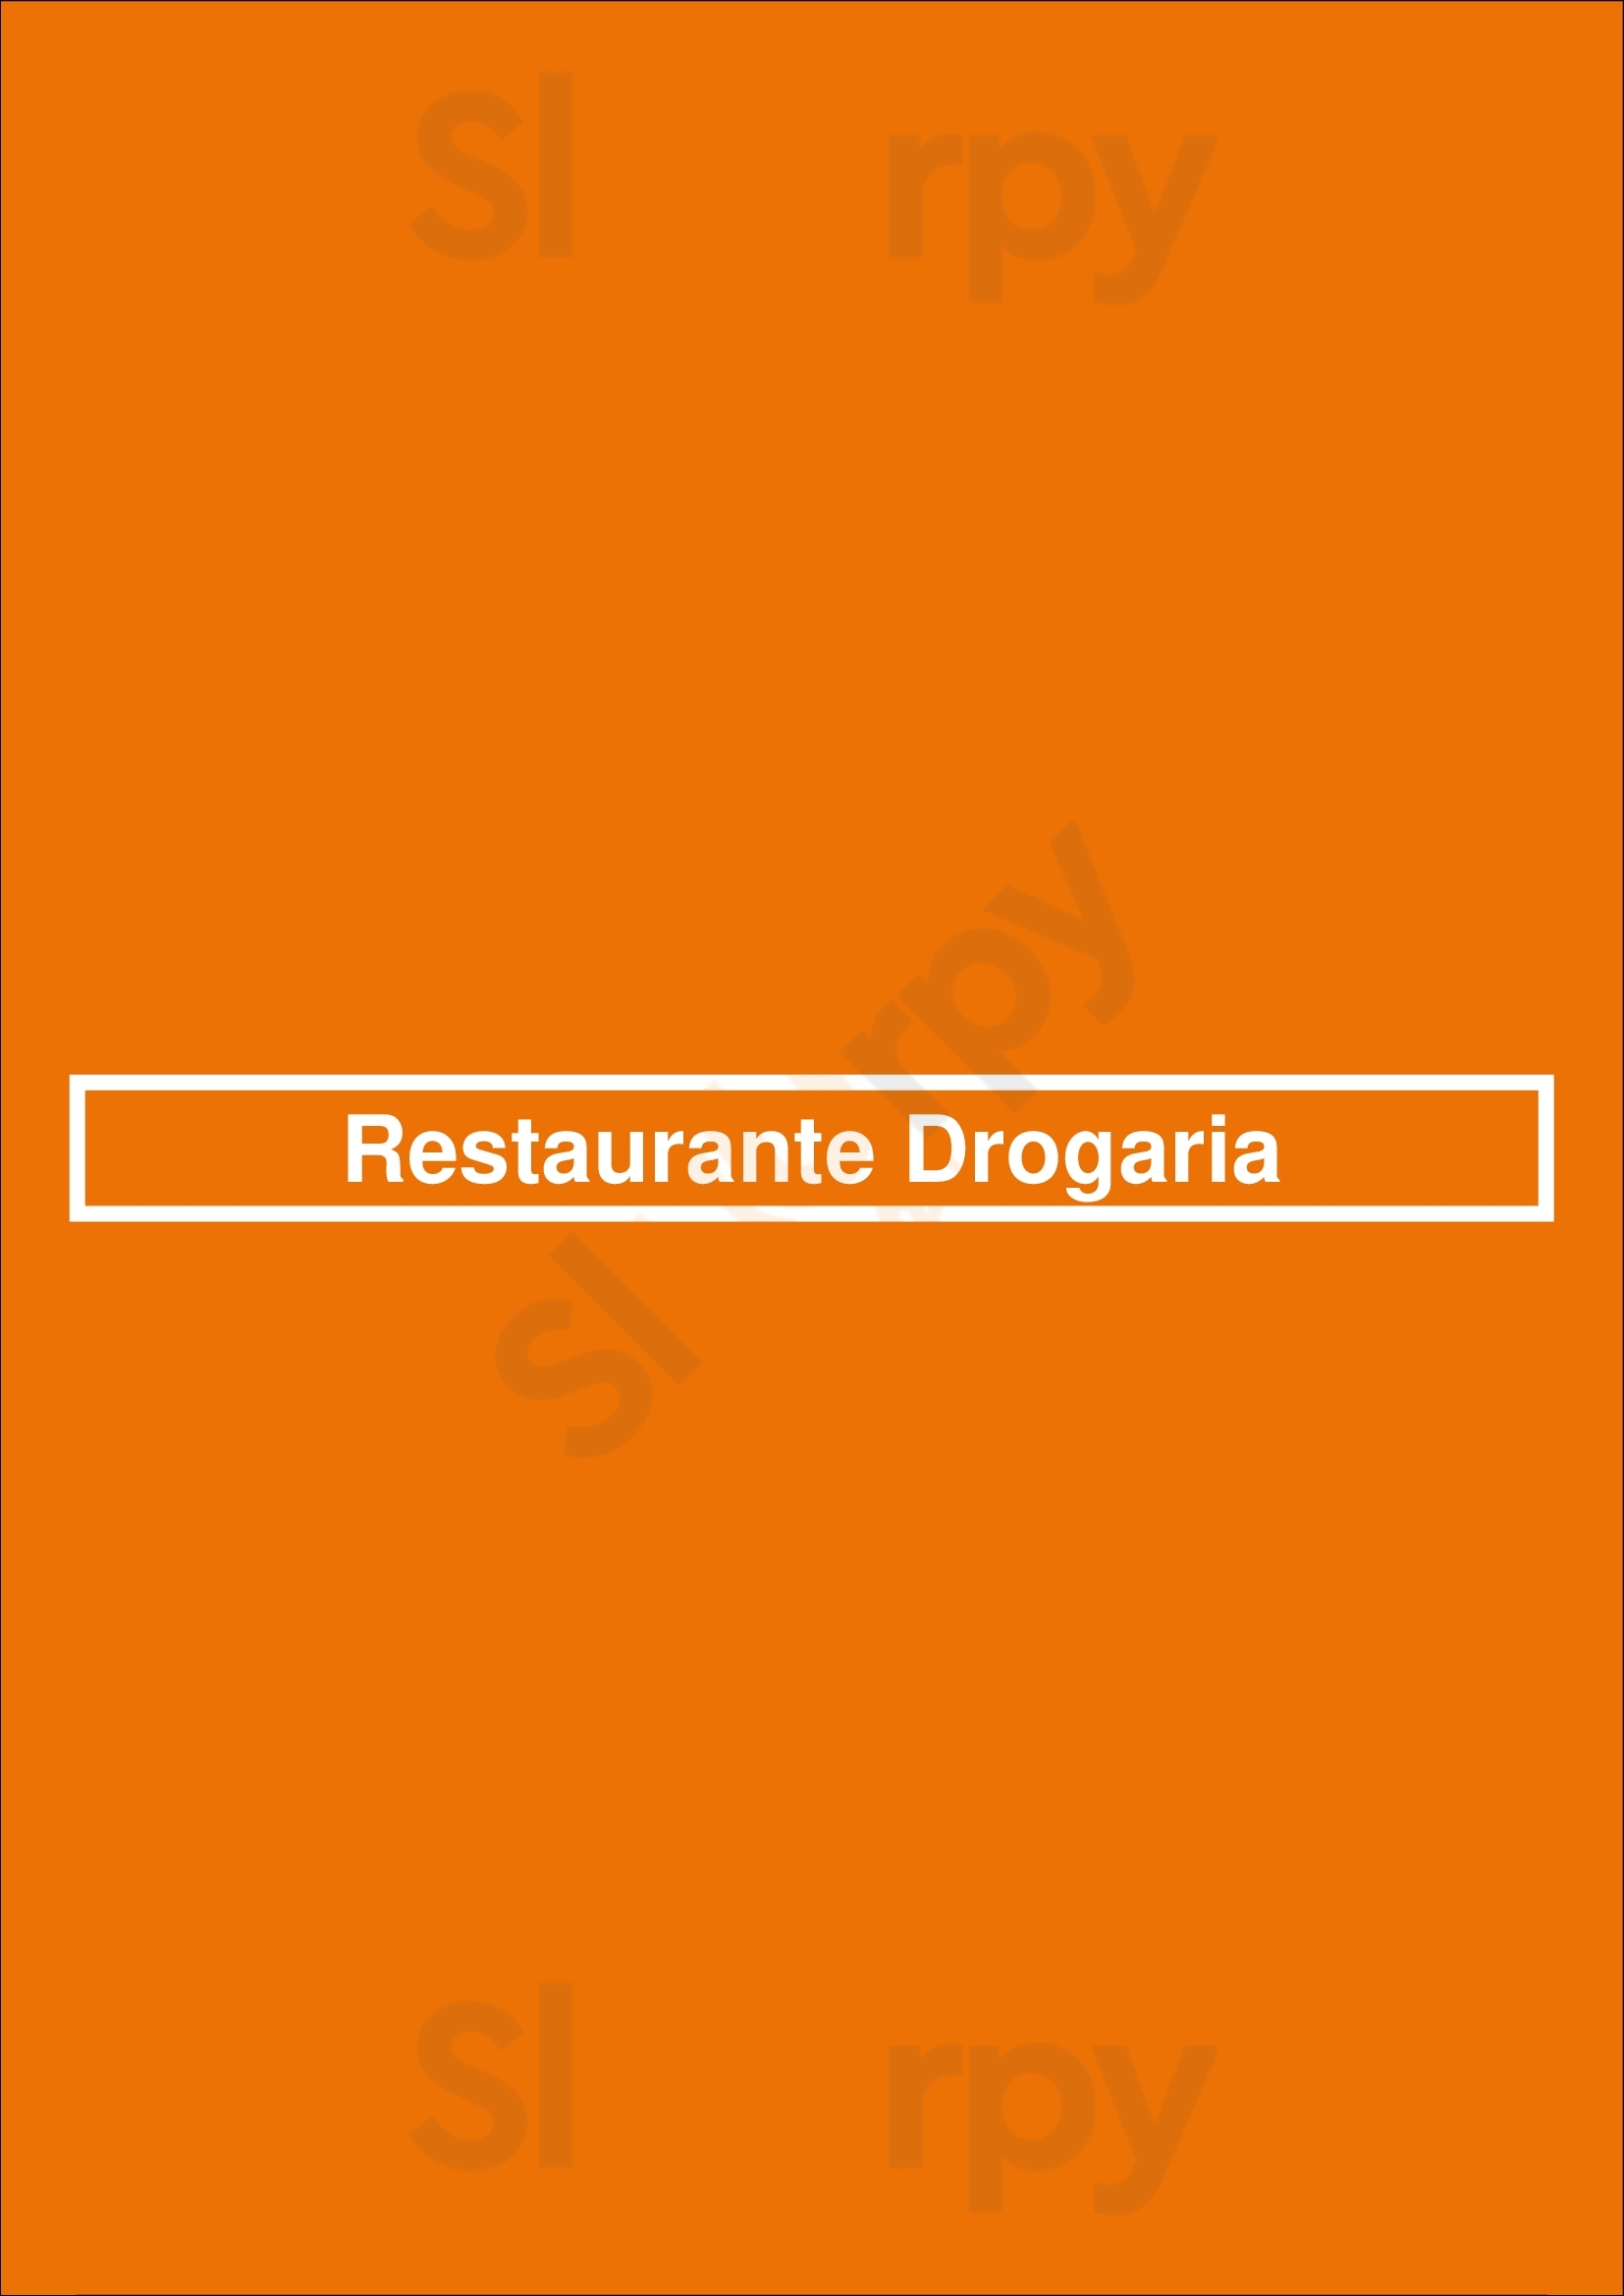 Restaurante Drogaria Lisboa Menu - 1